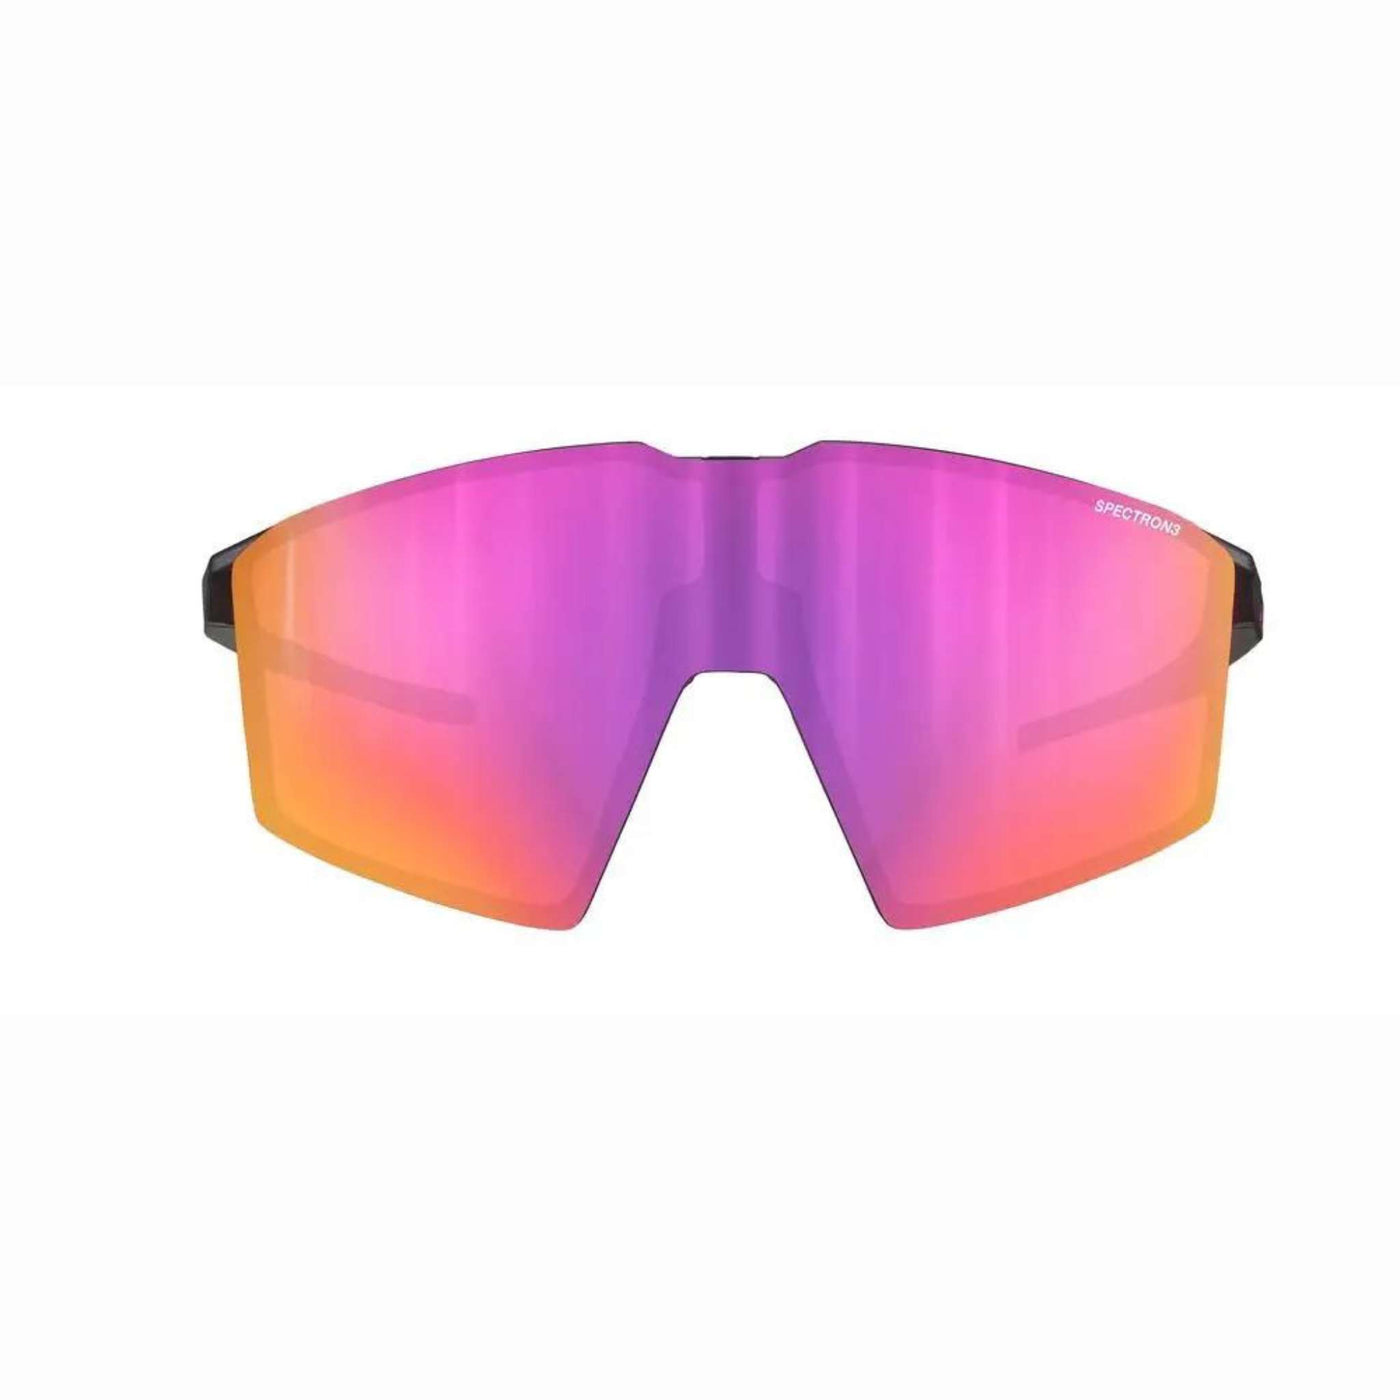 Julbo Edge Matt Black/Pink Sunglasses - Spectron 3 CF Lens | Performance Sunglasses | Further Faster Christchurch NZ